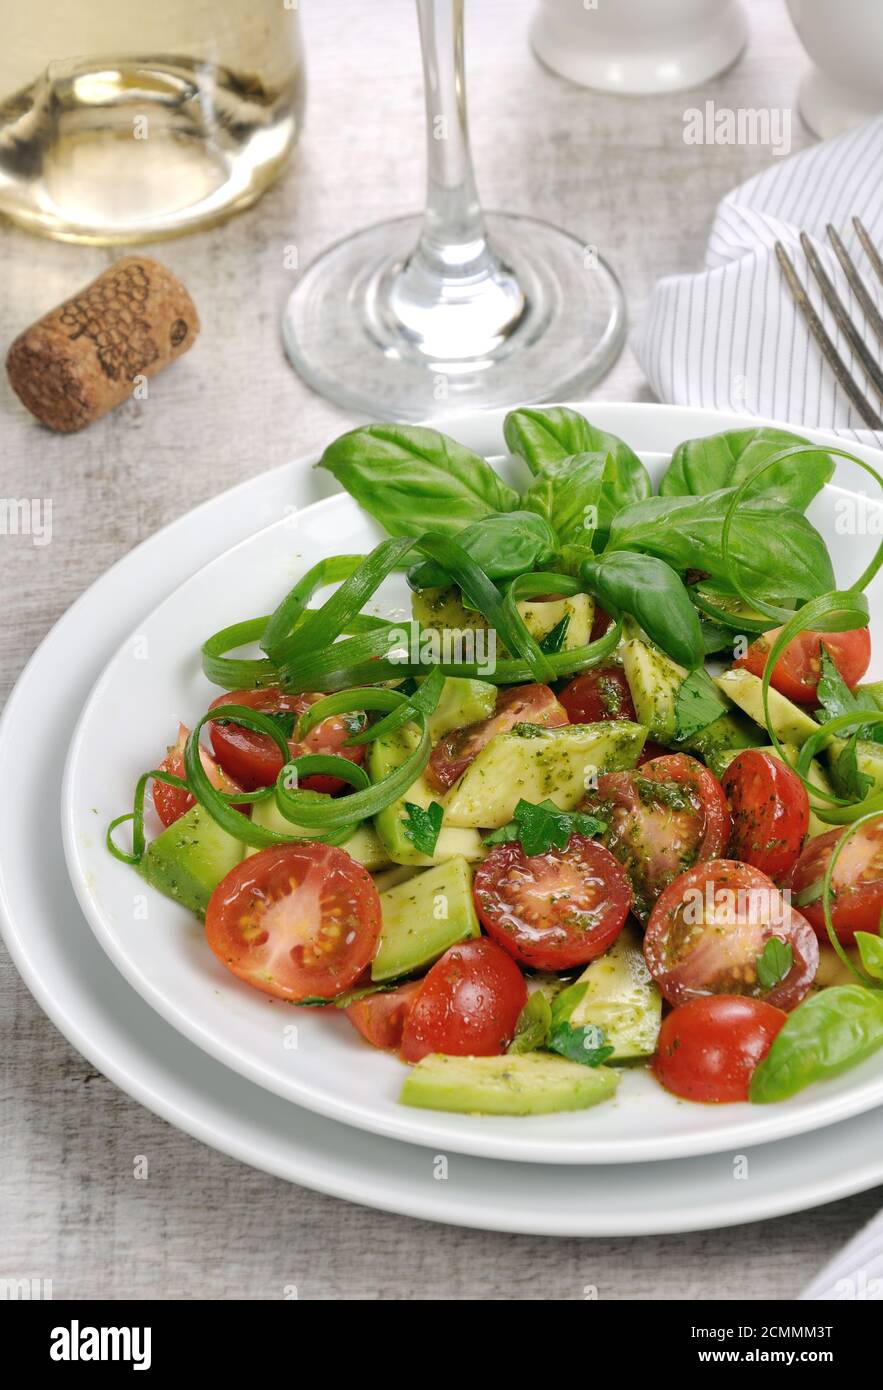 Delicate slices of avocado with tomatoes, dressed   pesto sauce. Stock Photo